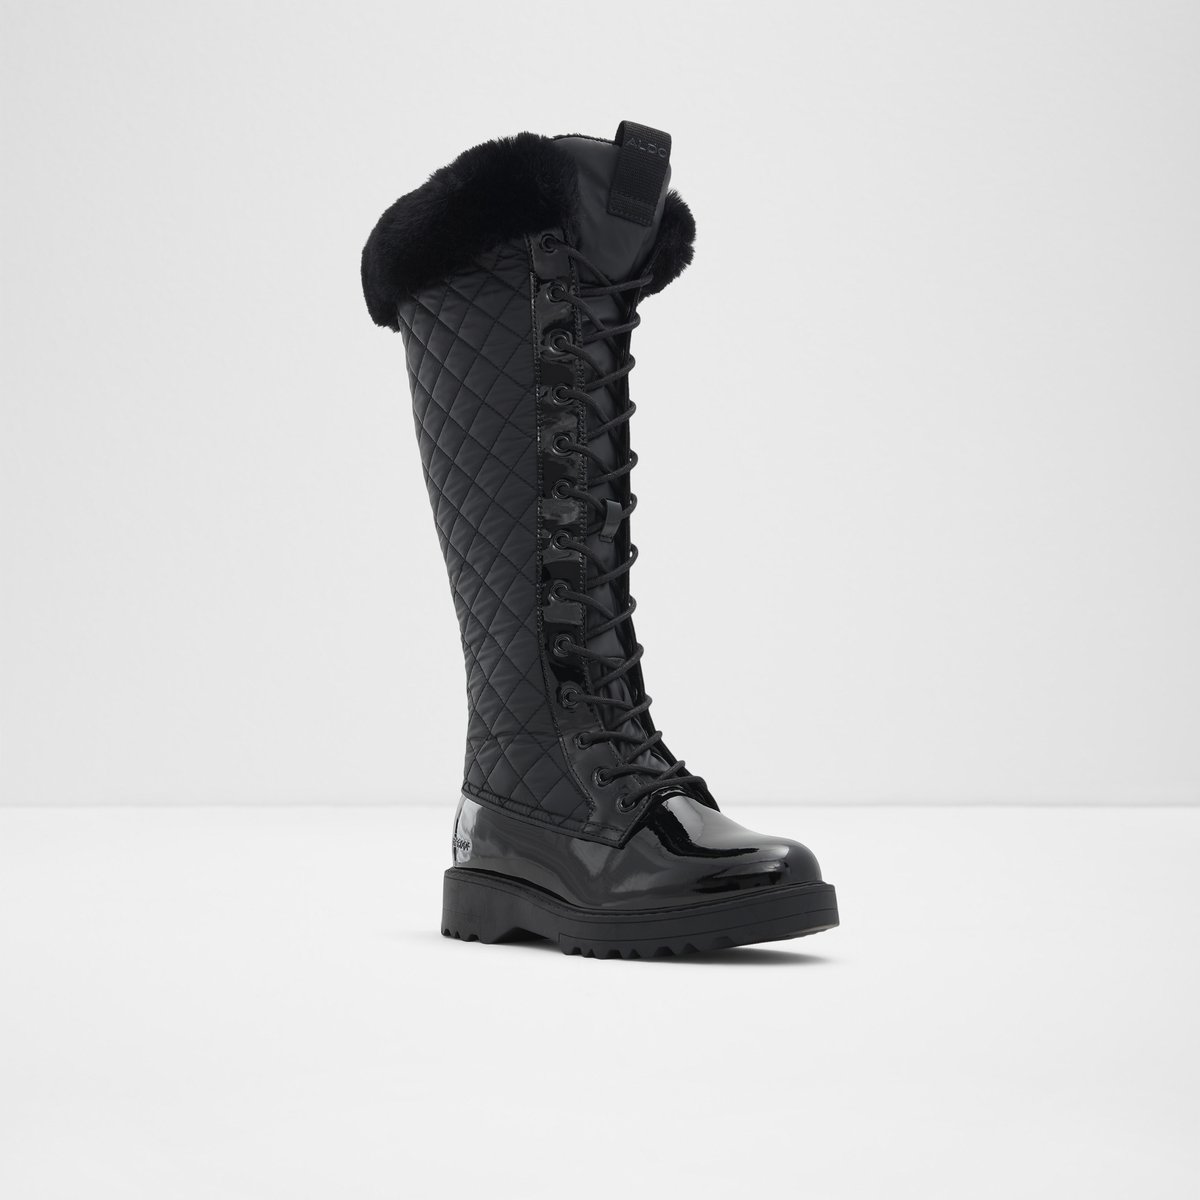 CA$ 205.00 - Aldo Laralima Winter Boots - Lug Sole - www.fiyeye.com